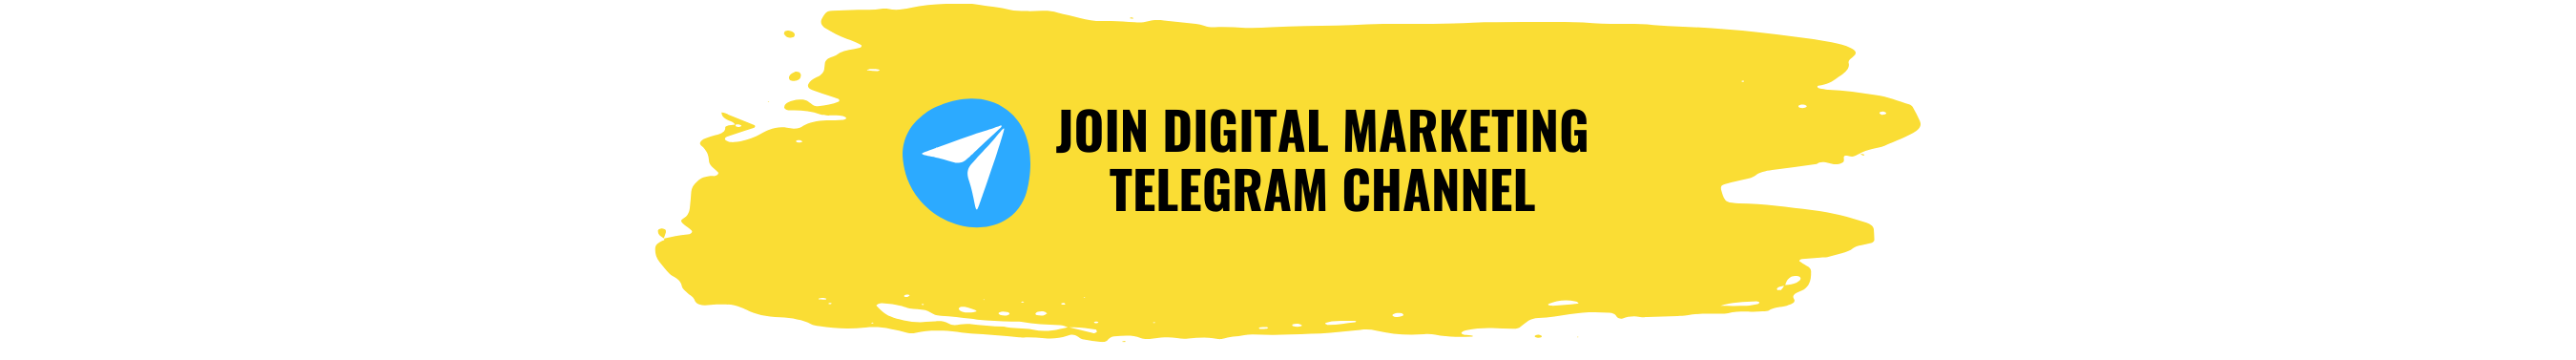 Digital Marketing Telegram Banner